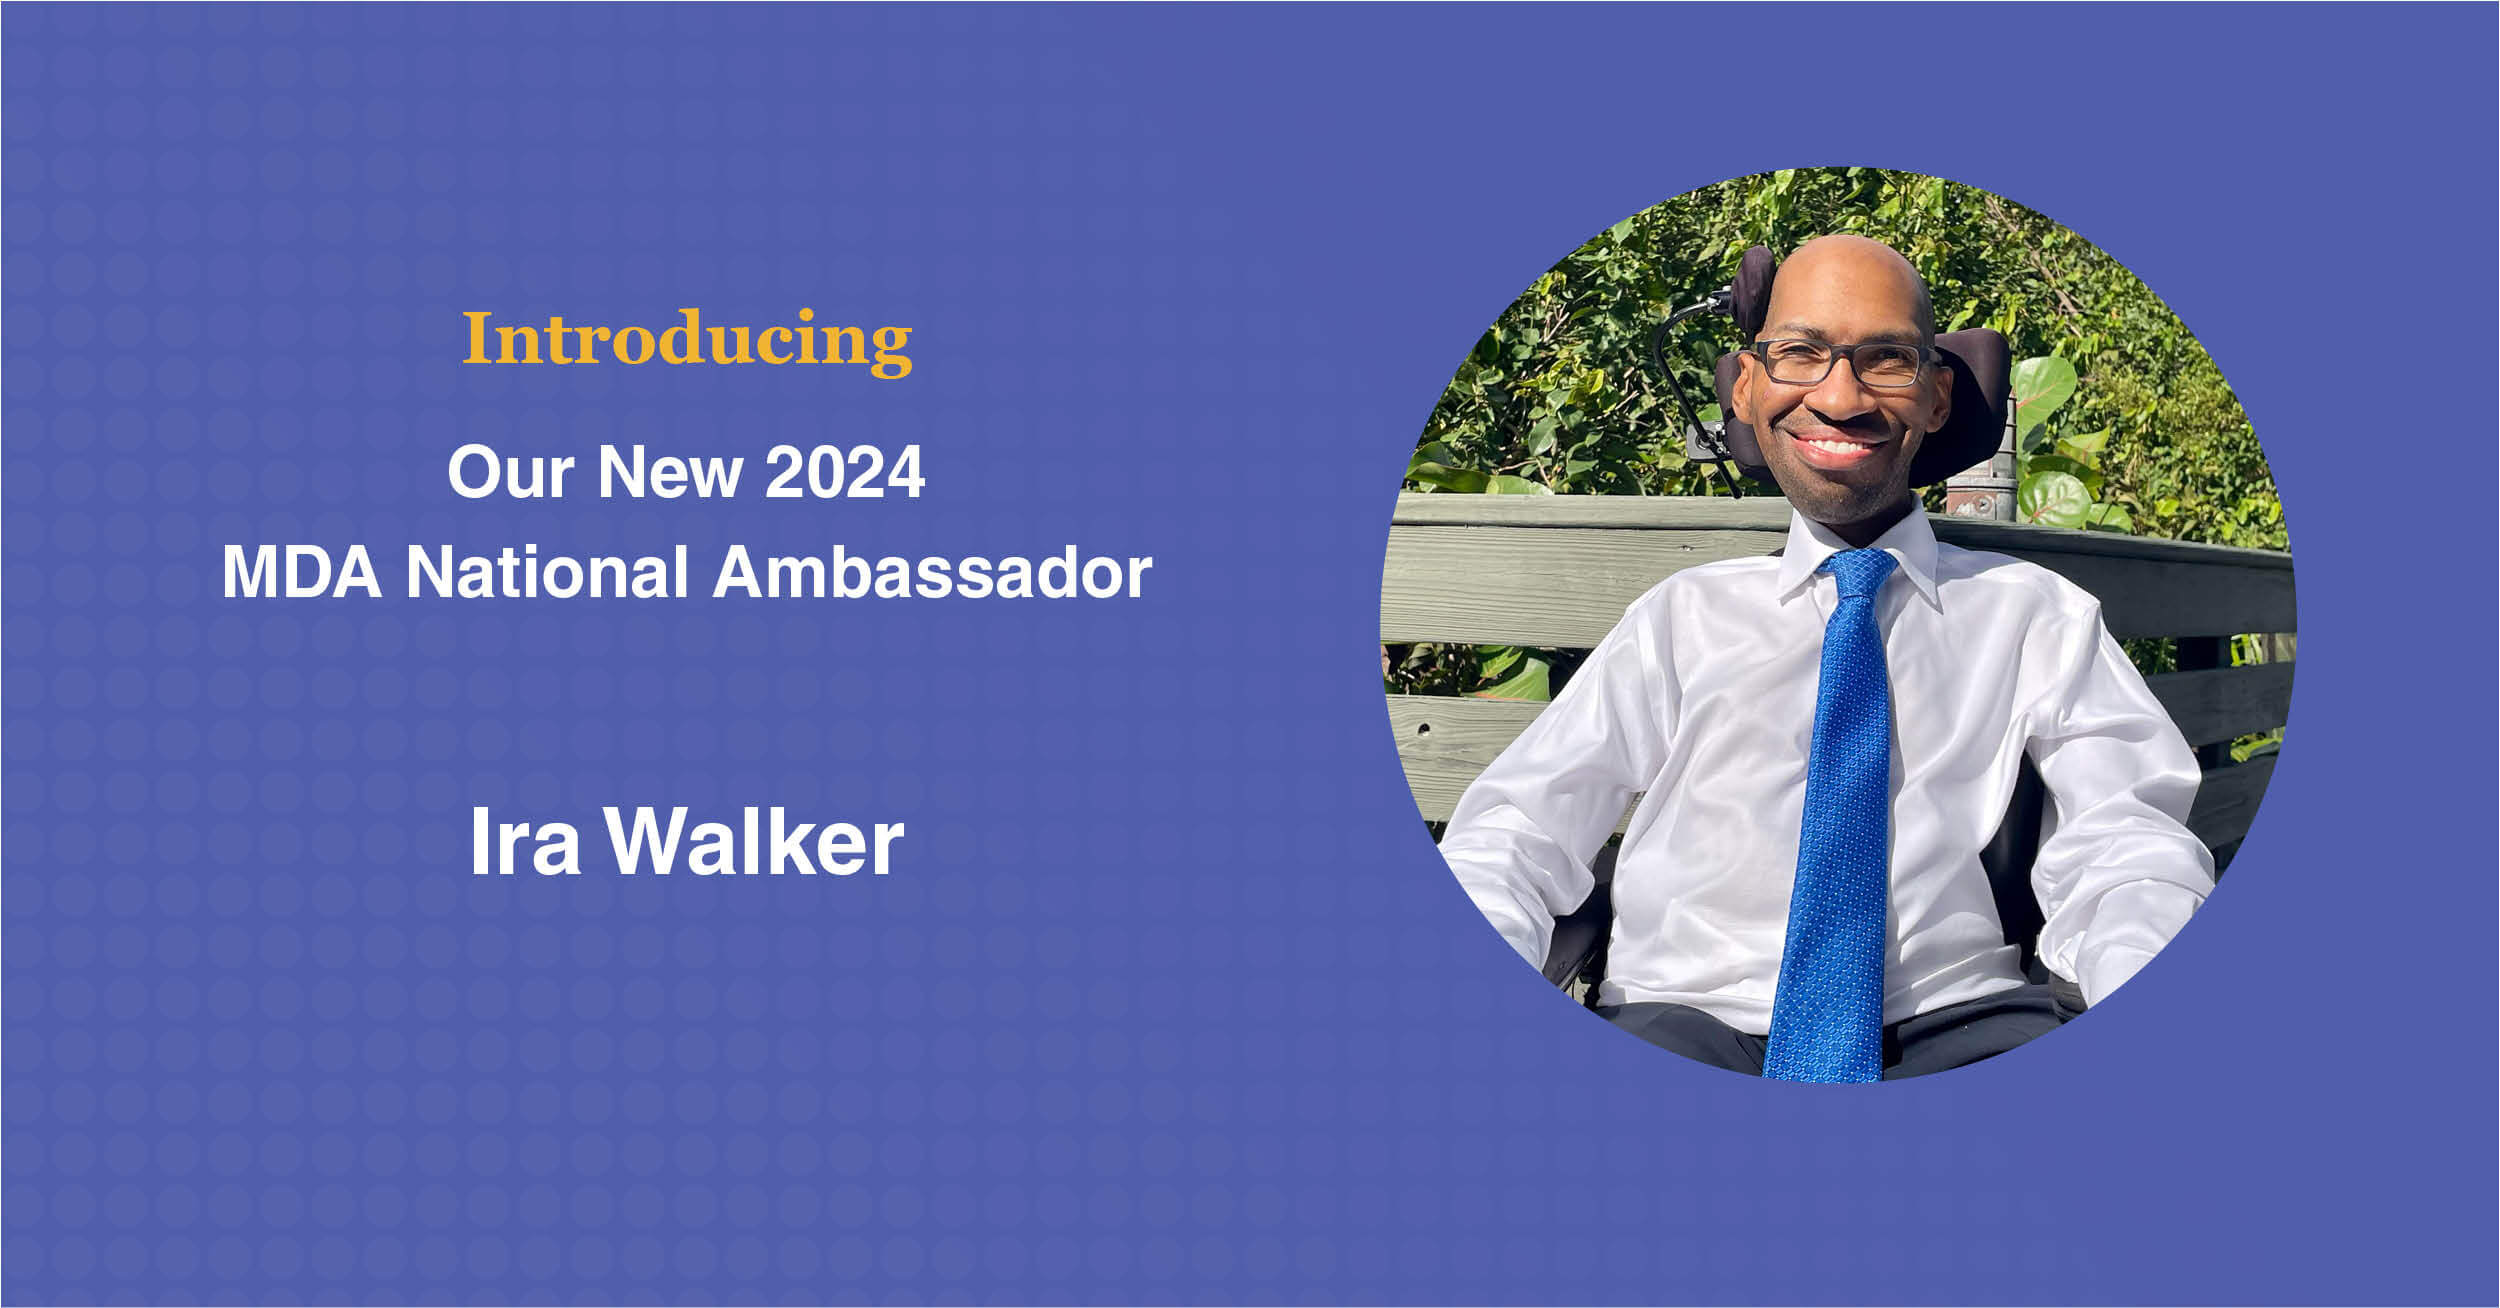 Introducing our new 2024 national ambassador, Ira Walker.